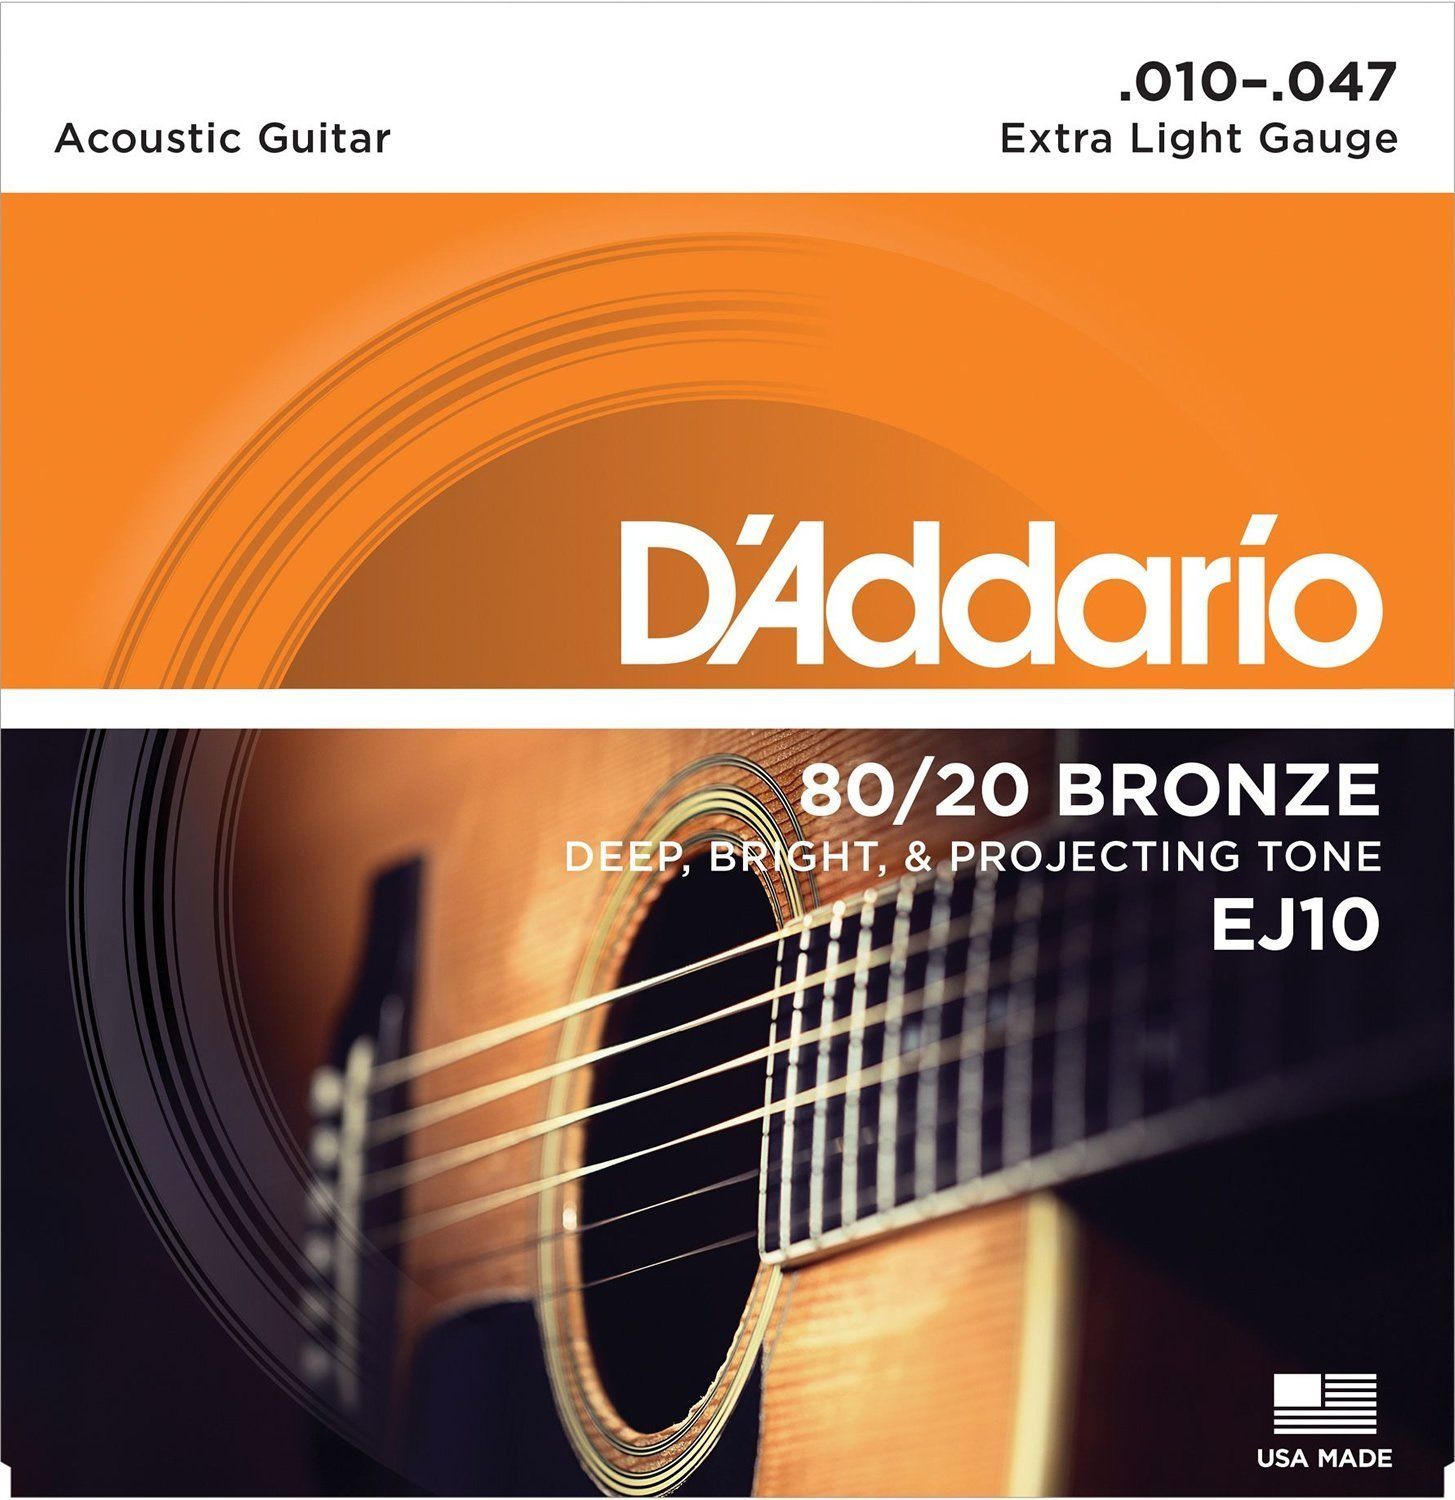 D'Addario EJ10 80/20 Bronze Acoustic Guitar Strings 10-47 Extra Light